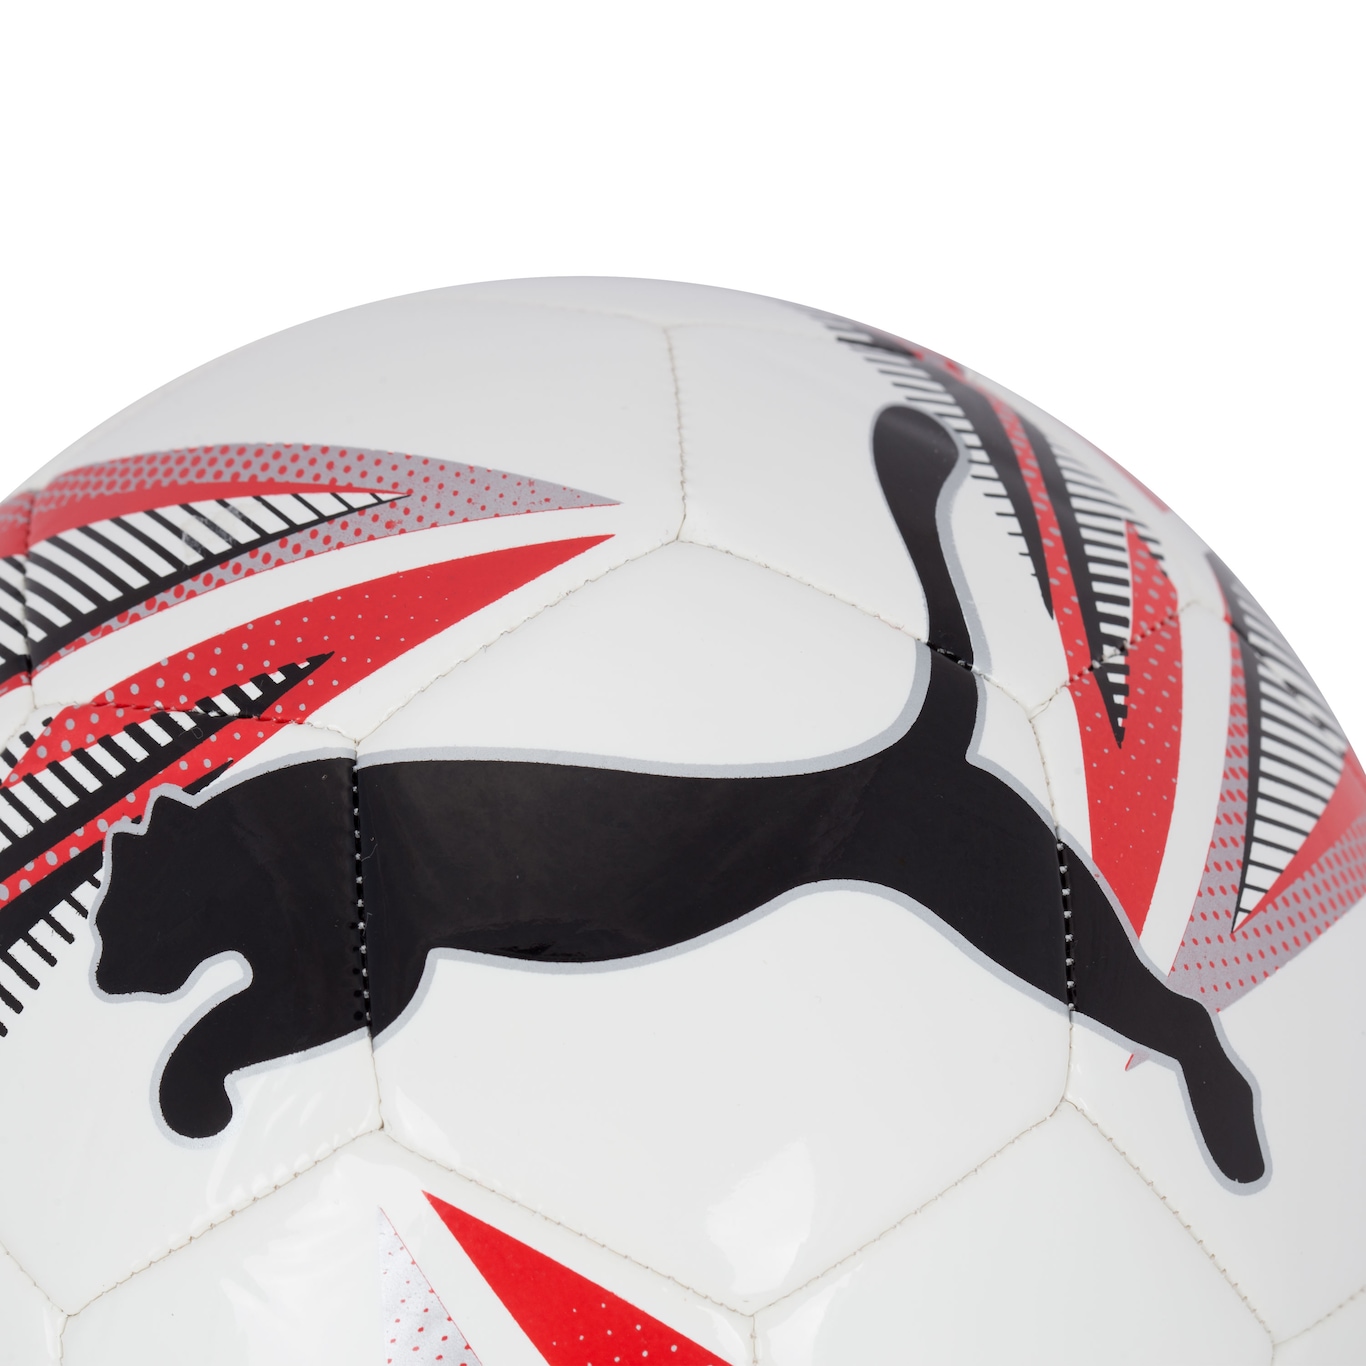 Bola de Futebol de Campo Puma Big Cat 4 - Foto 3